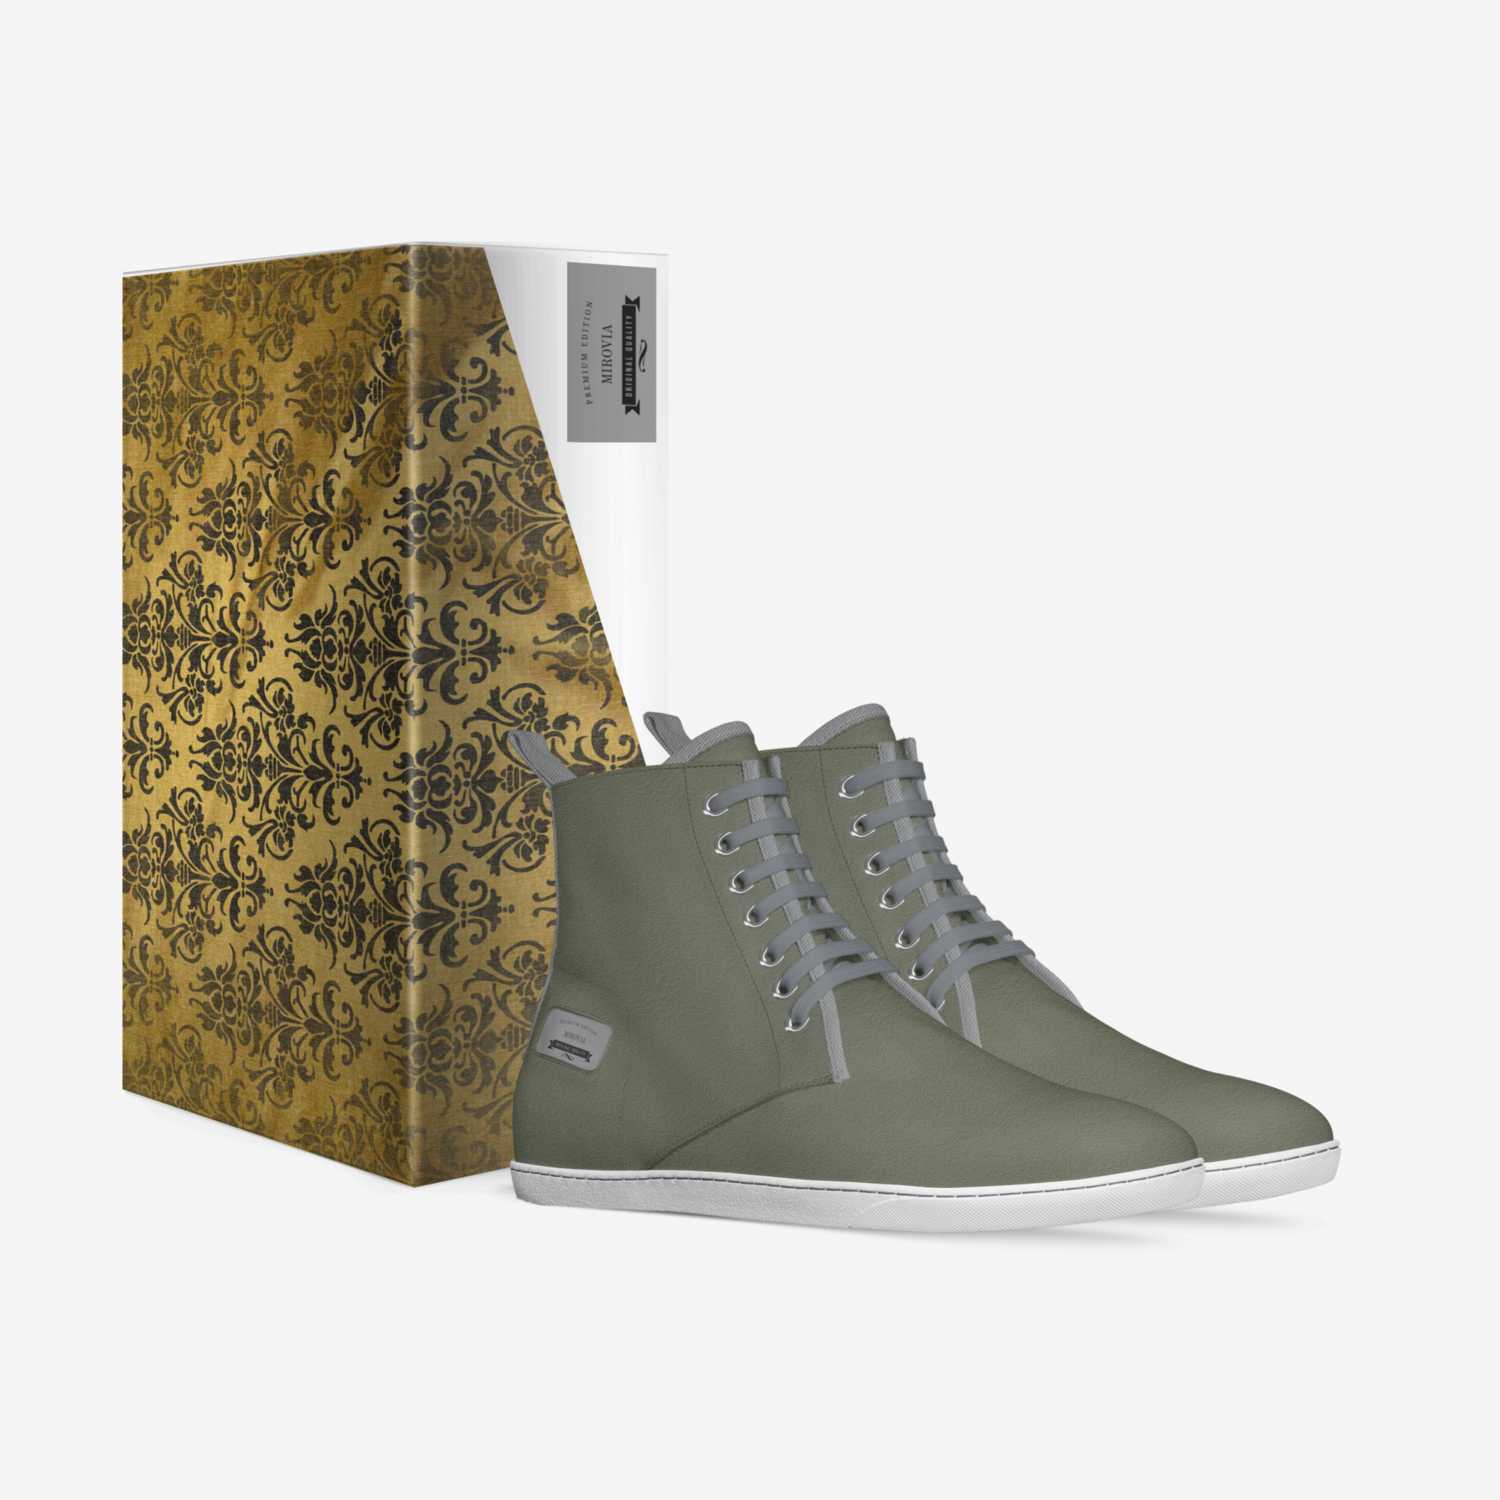 Mirovia custom made in Italy shoes by Joseph Buck | Box view